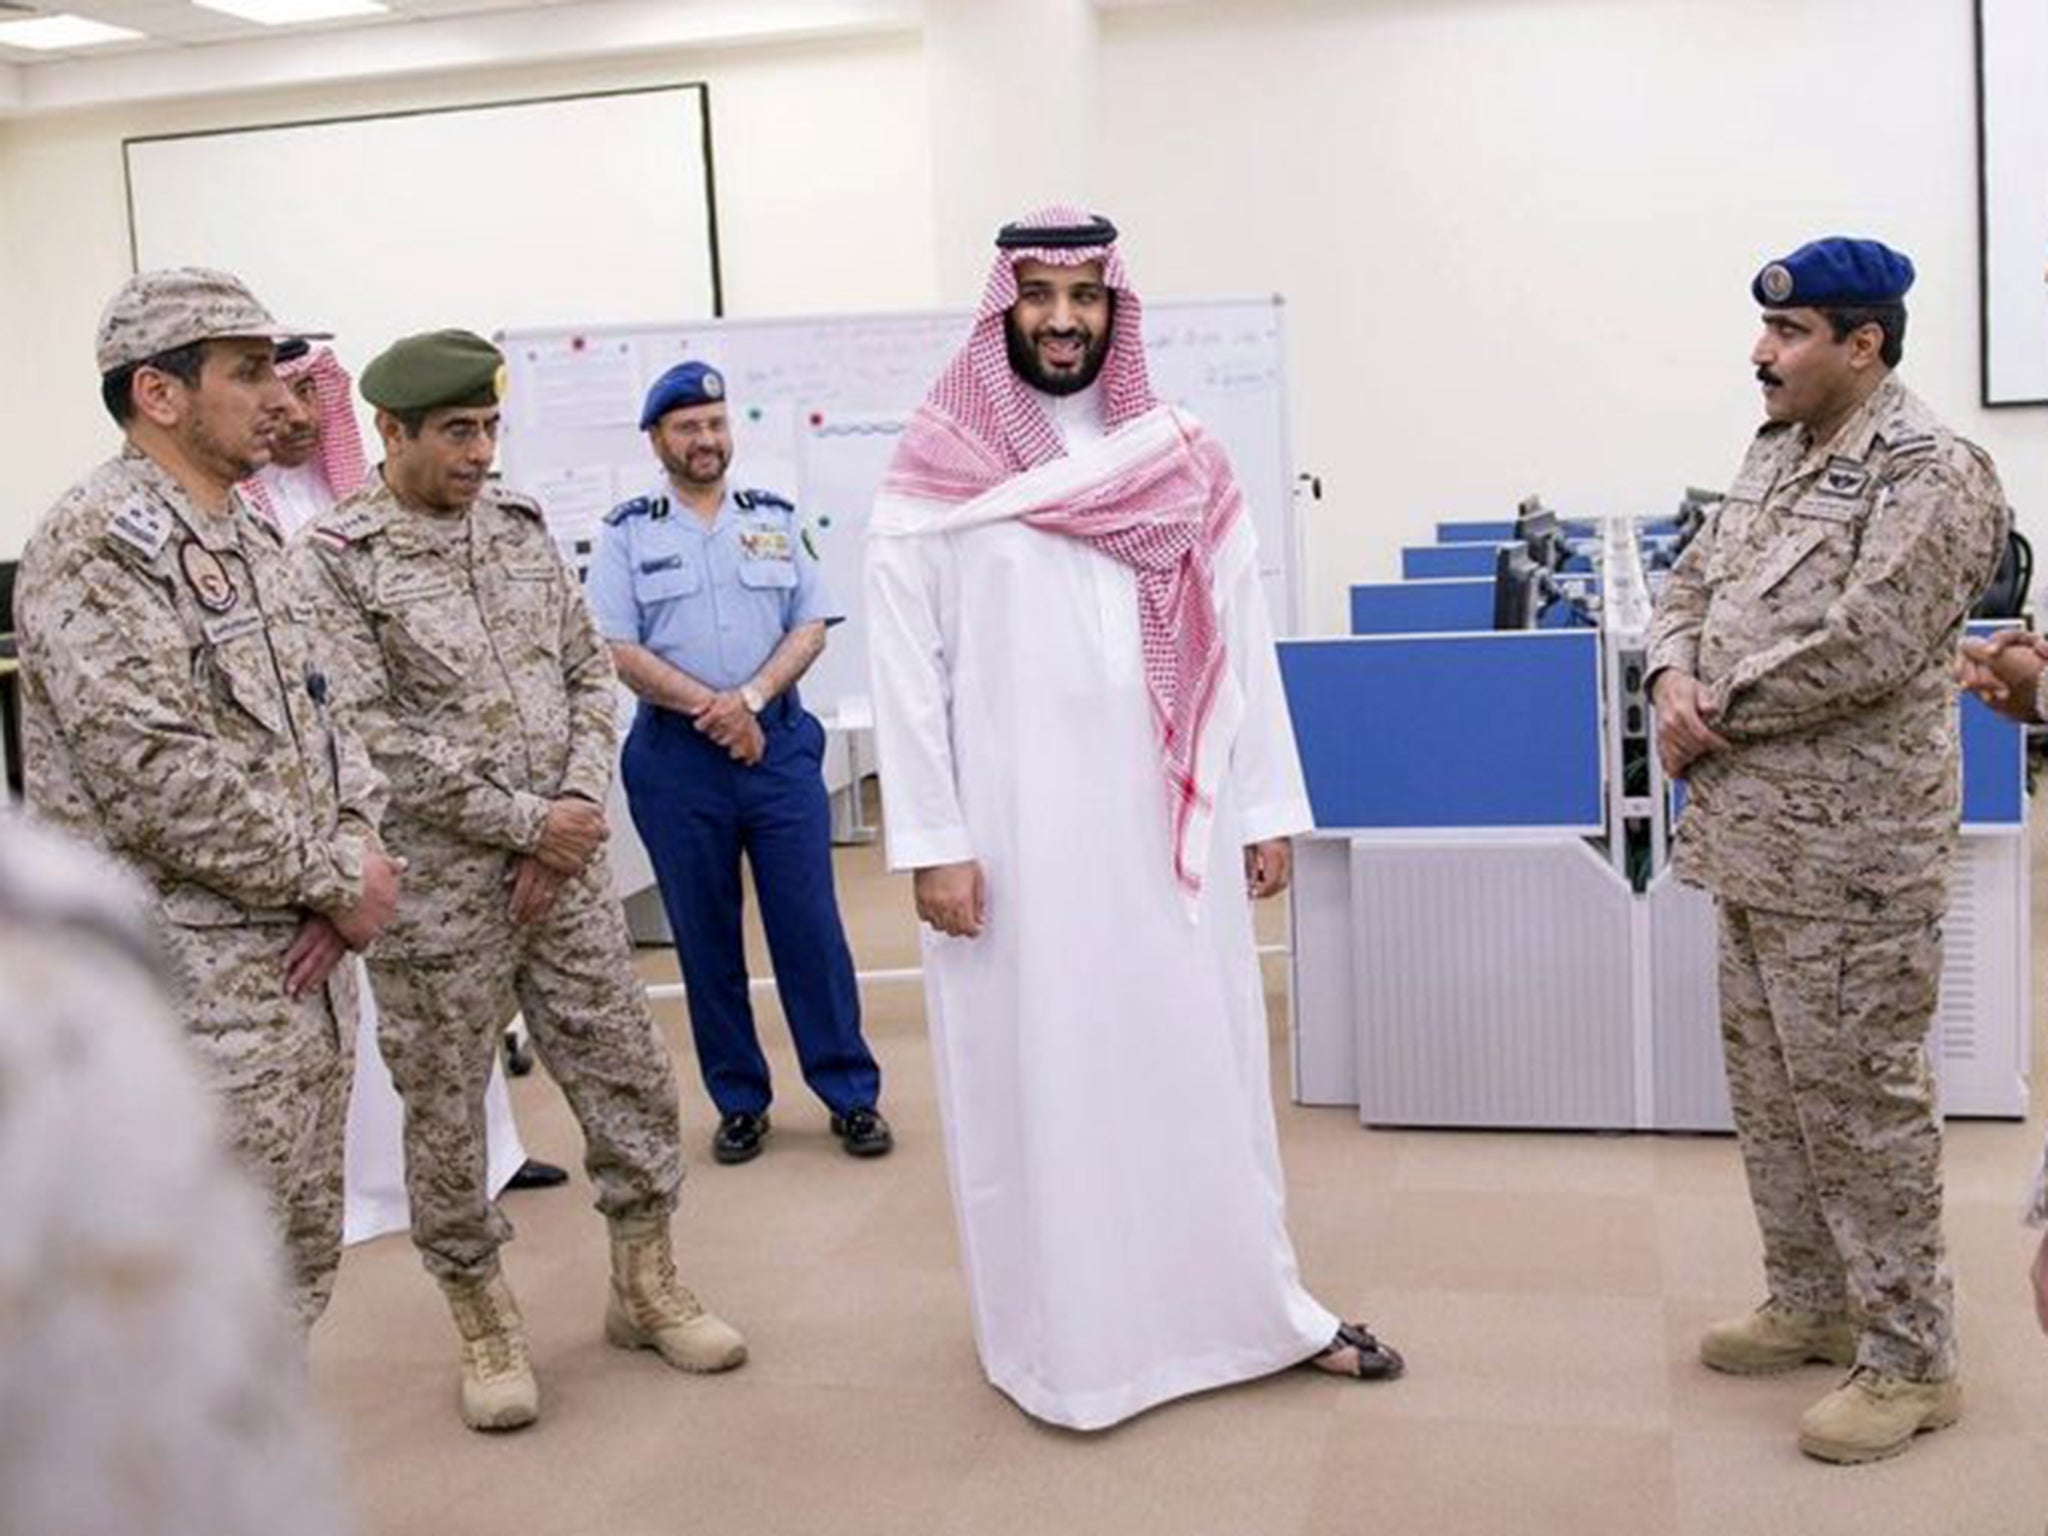 Saudi Defence Minister Mohammed bin Salman wants to establish Saudi Arabia as absolutely dominant in the Arabian Peninsula